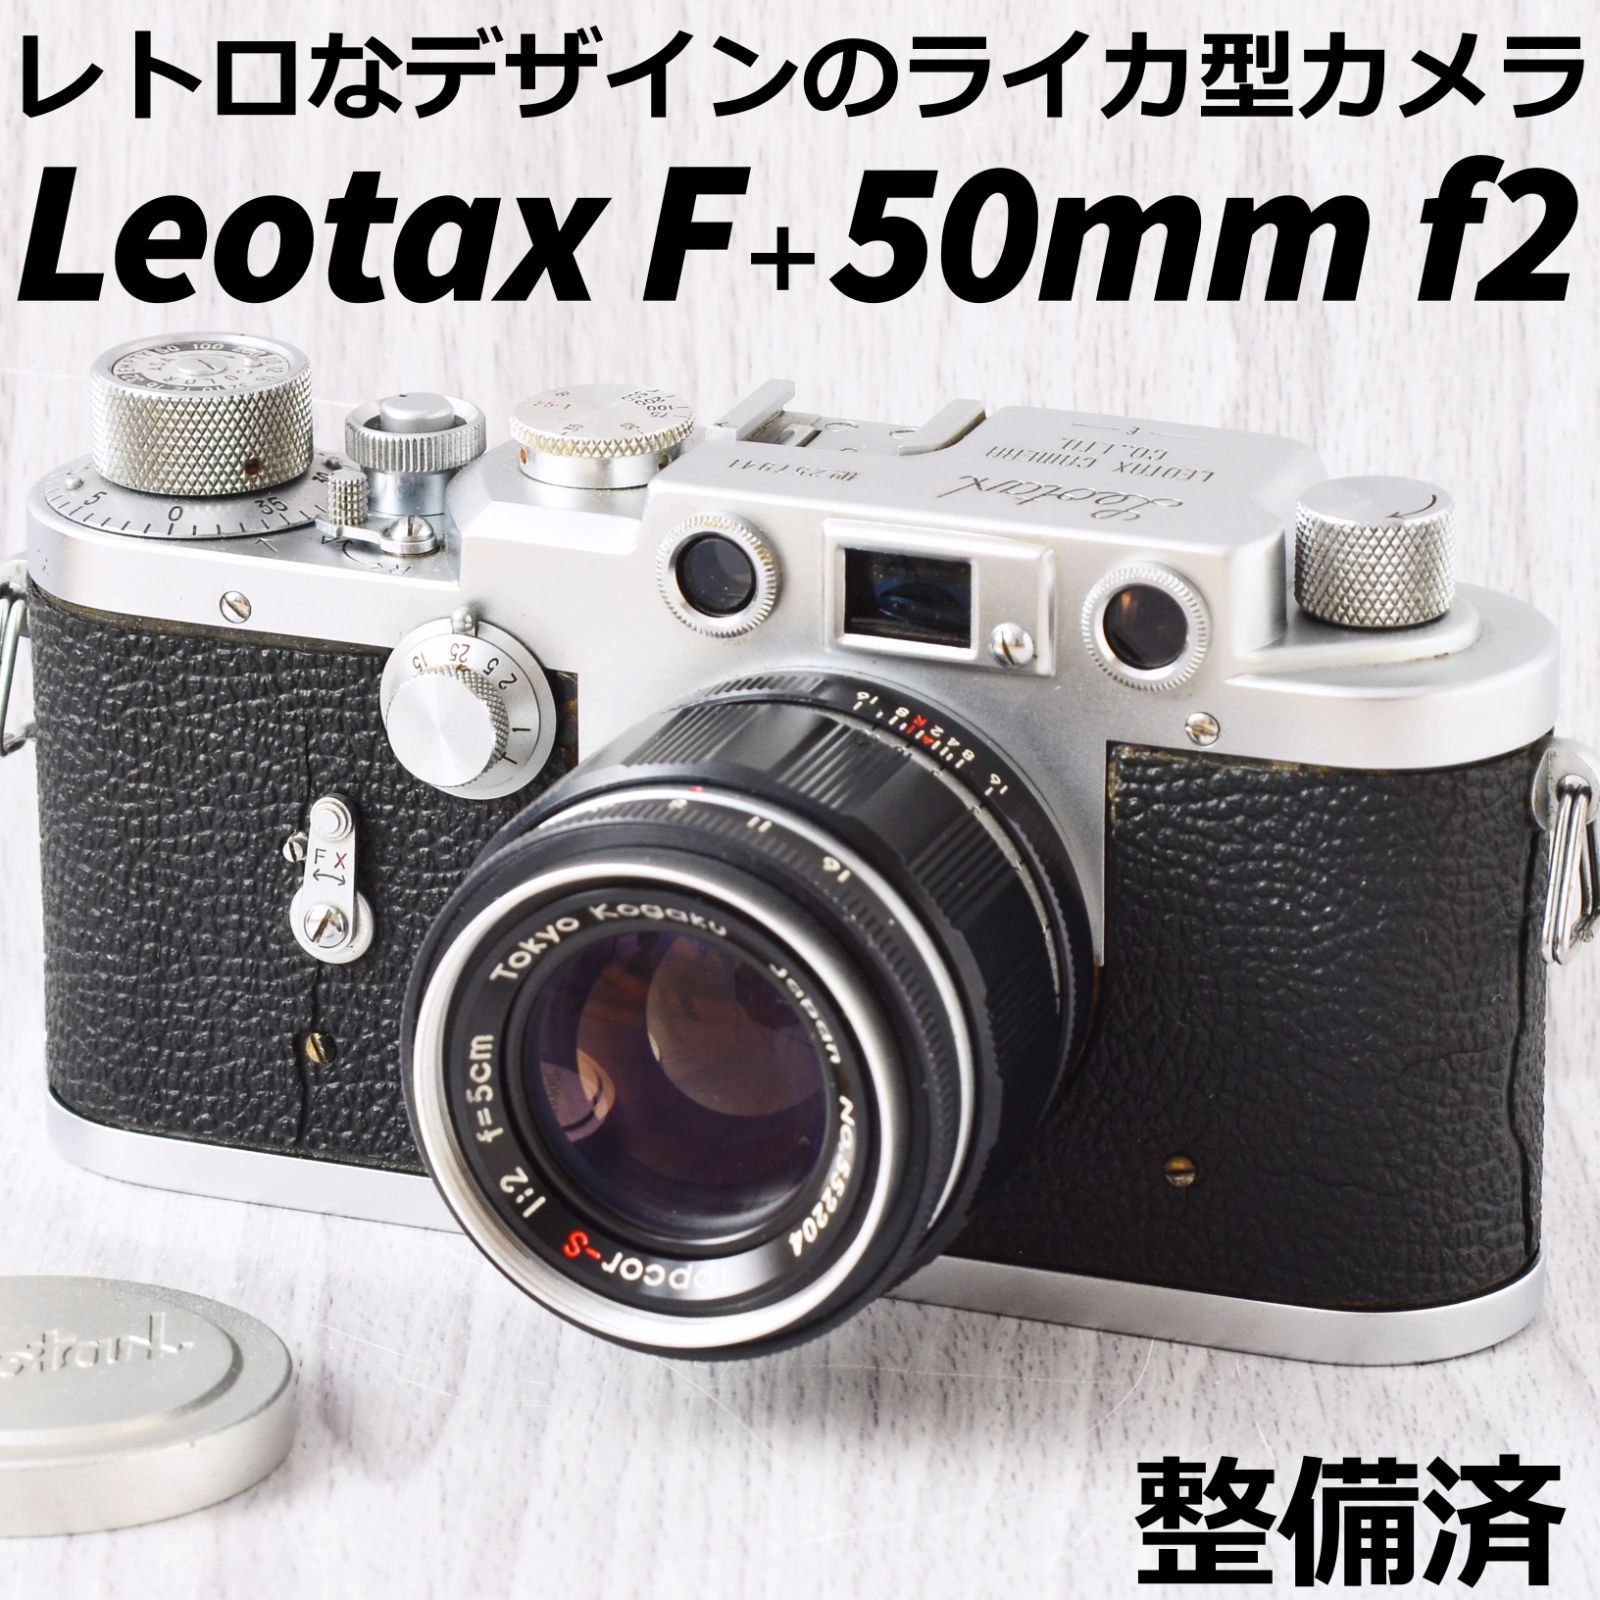 Leotax F + 50mm f2 バルナックライカ型オールドカメラ 整備済